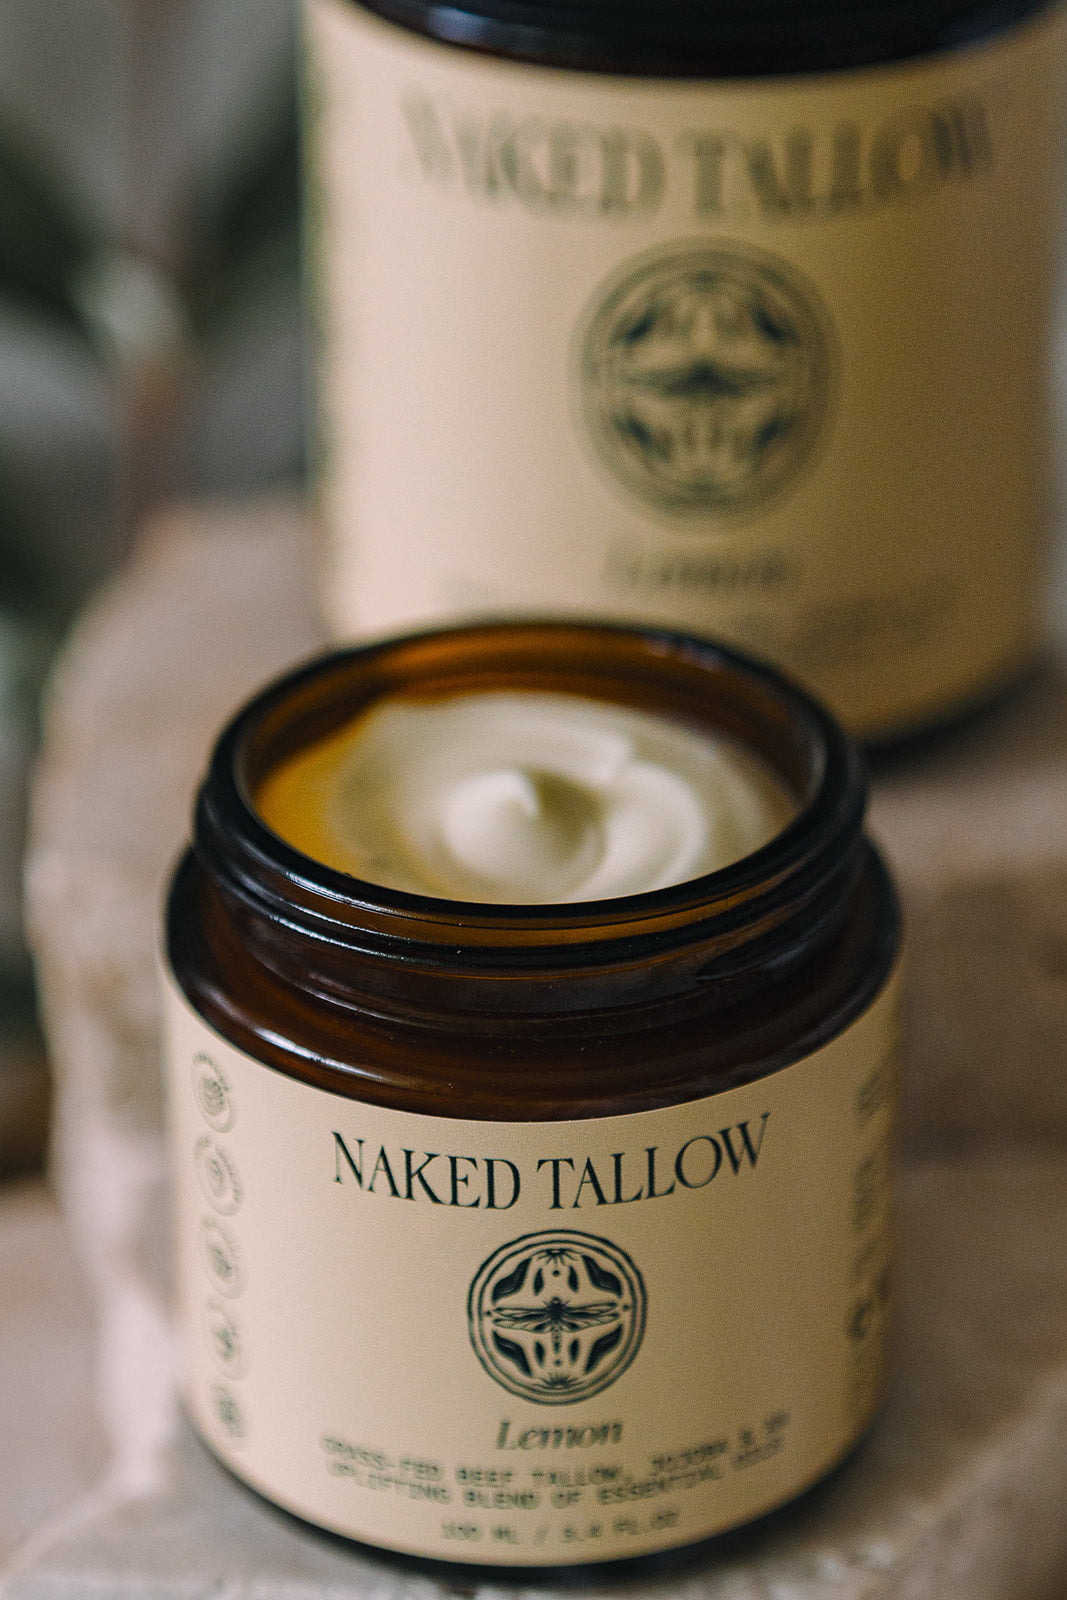 Tallow Cream